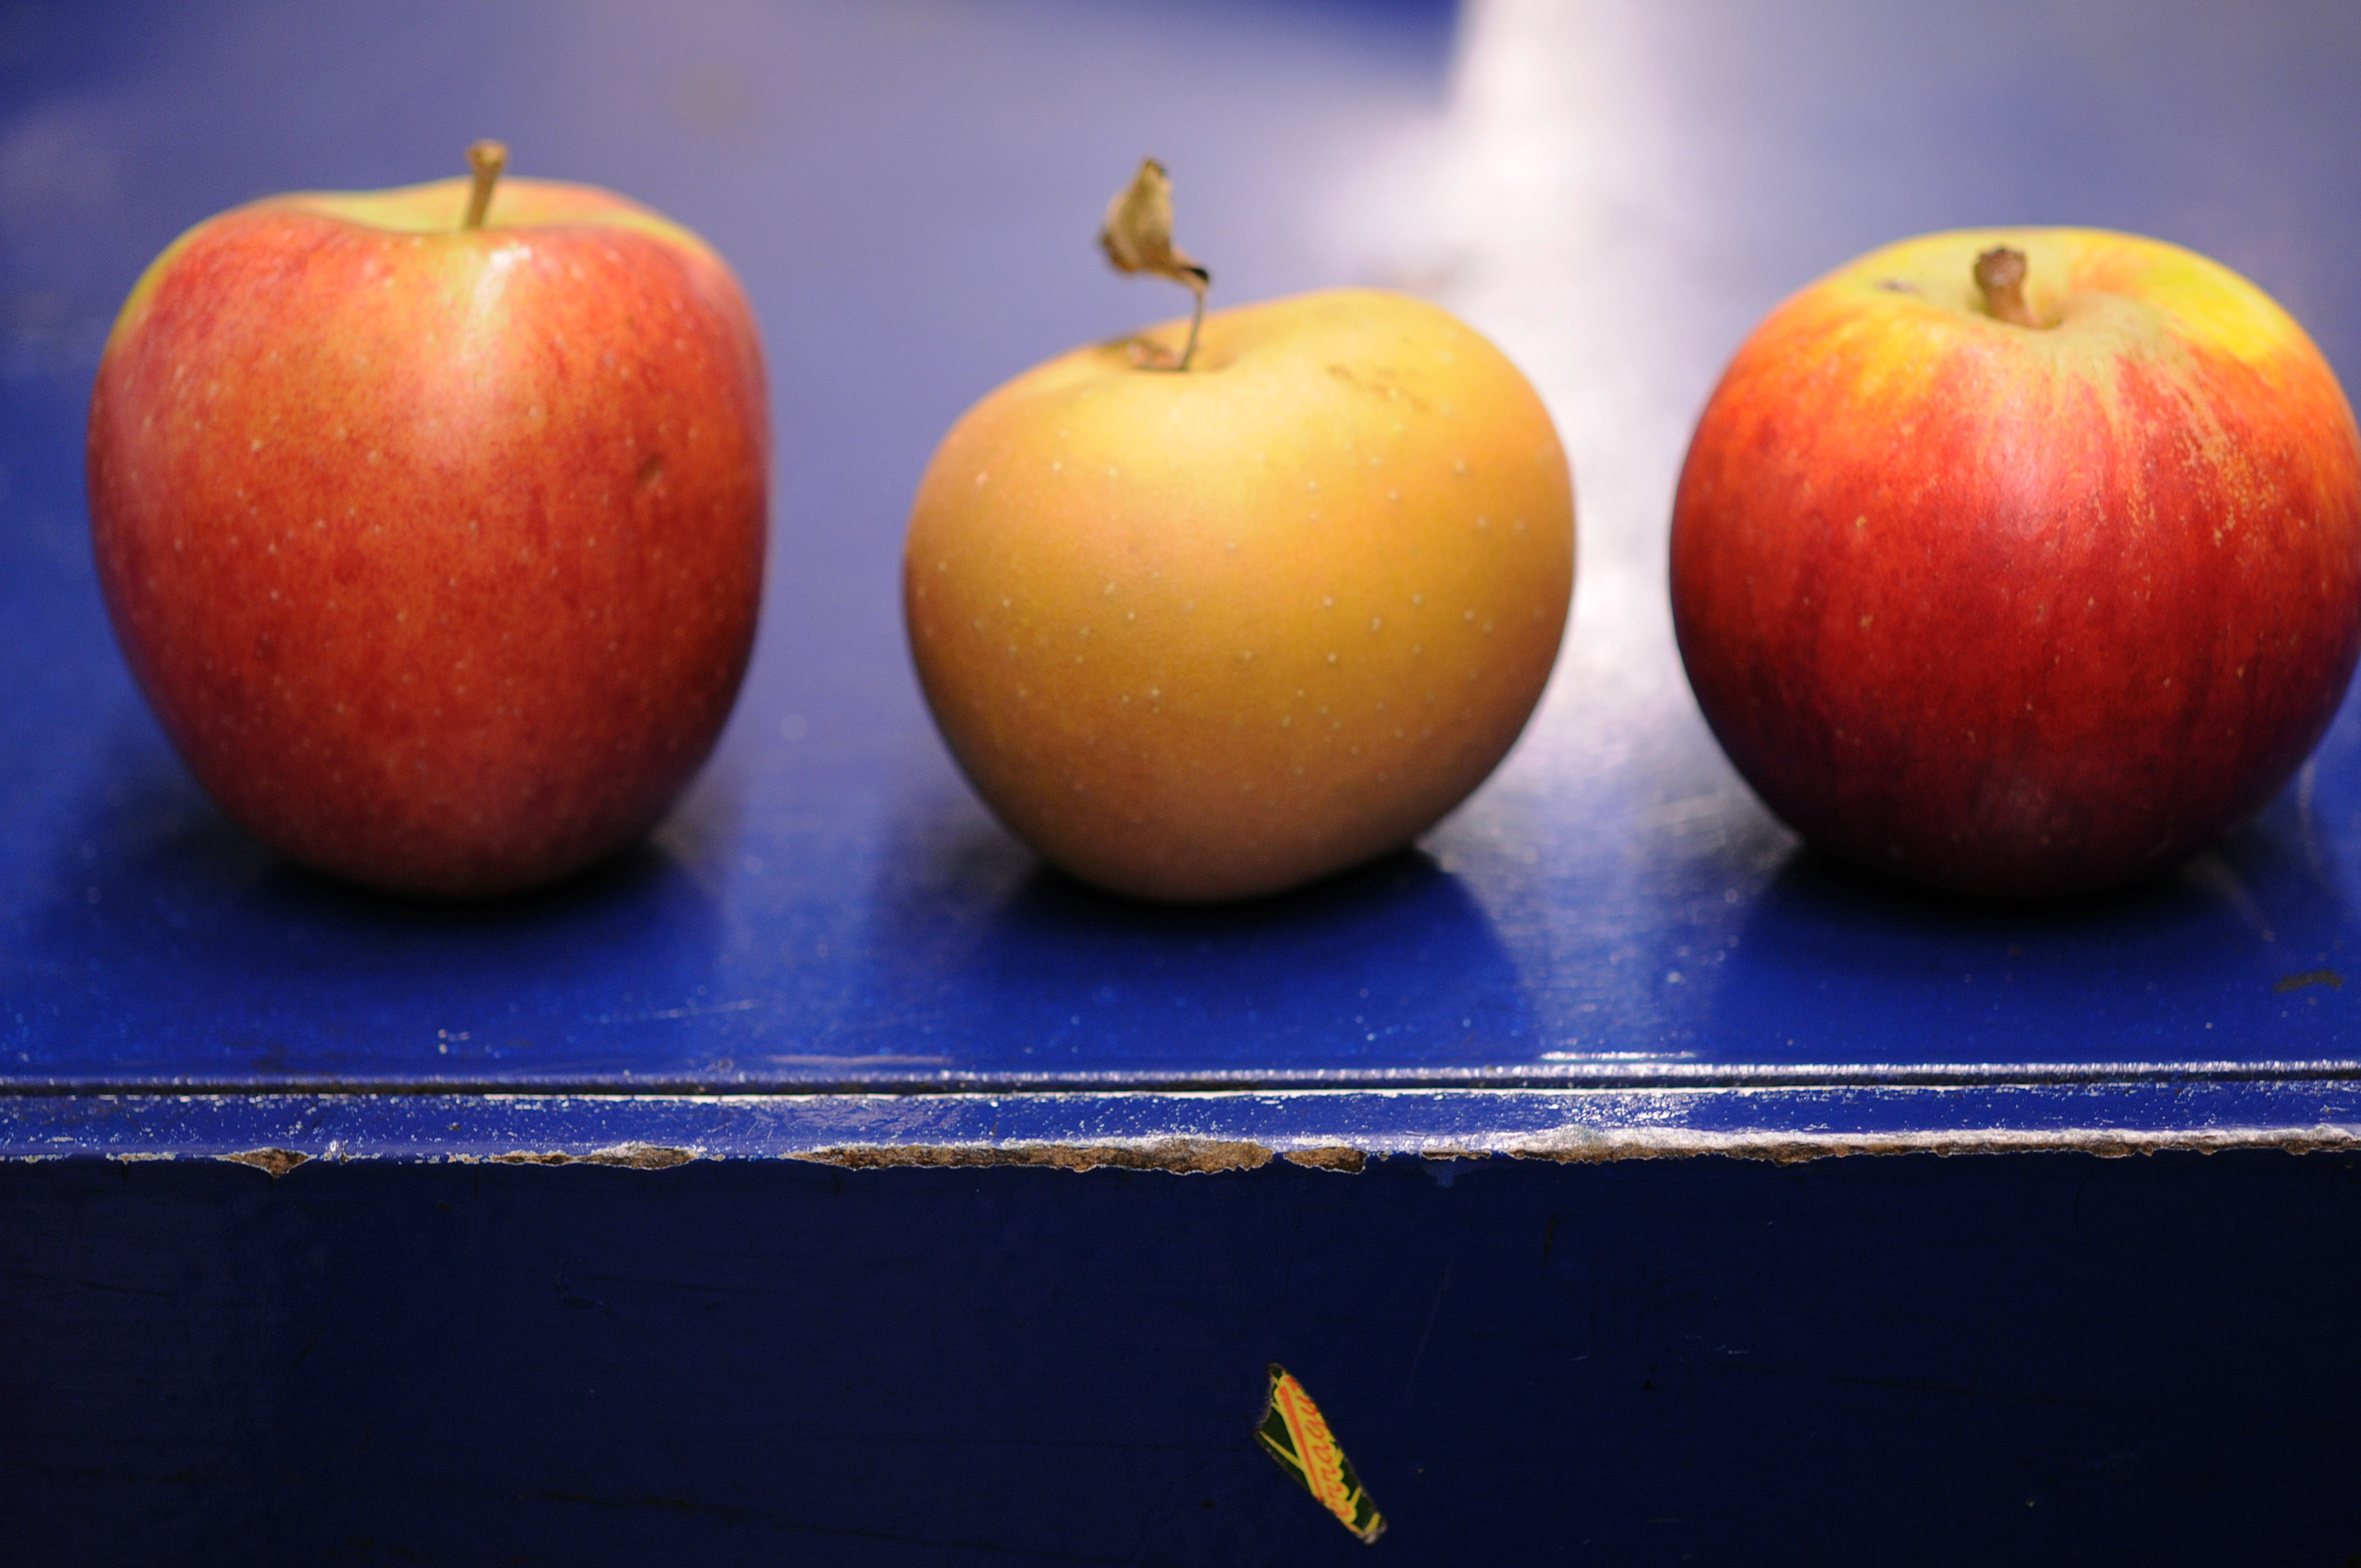 fruit-and-vegetable-market-report-february-2014-apples.jpg?mtime=20170922113356#asset:11340